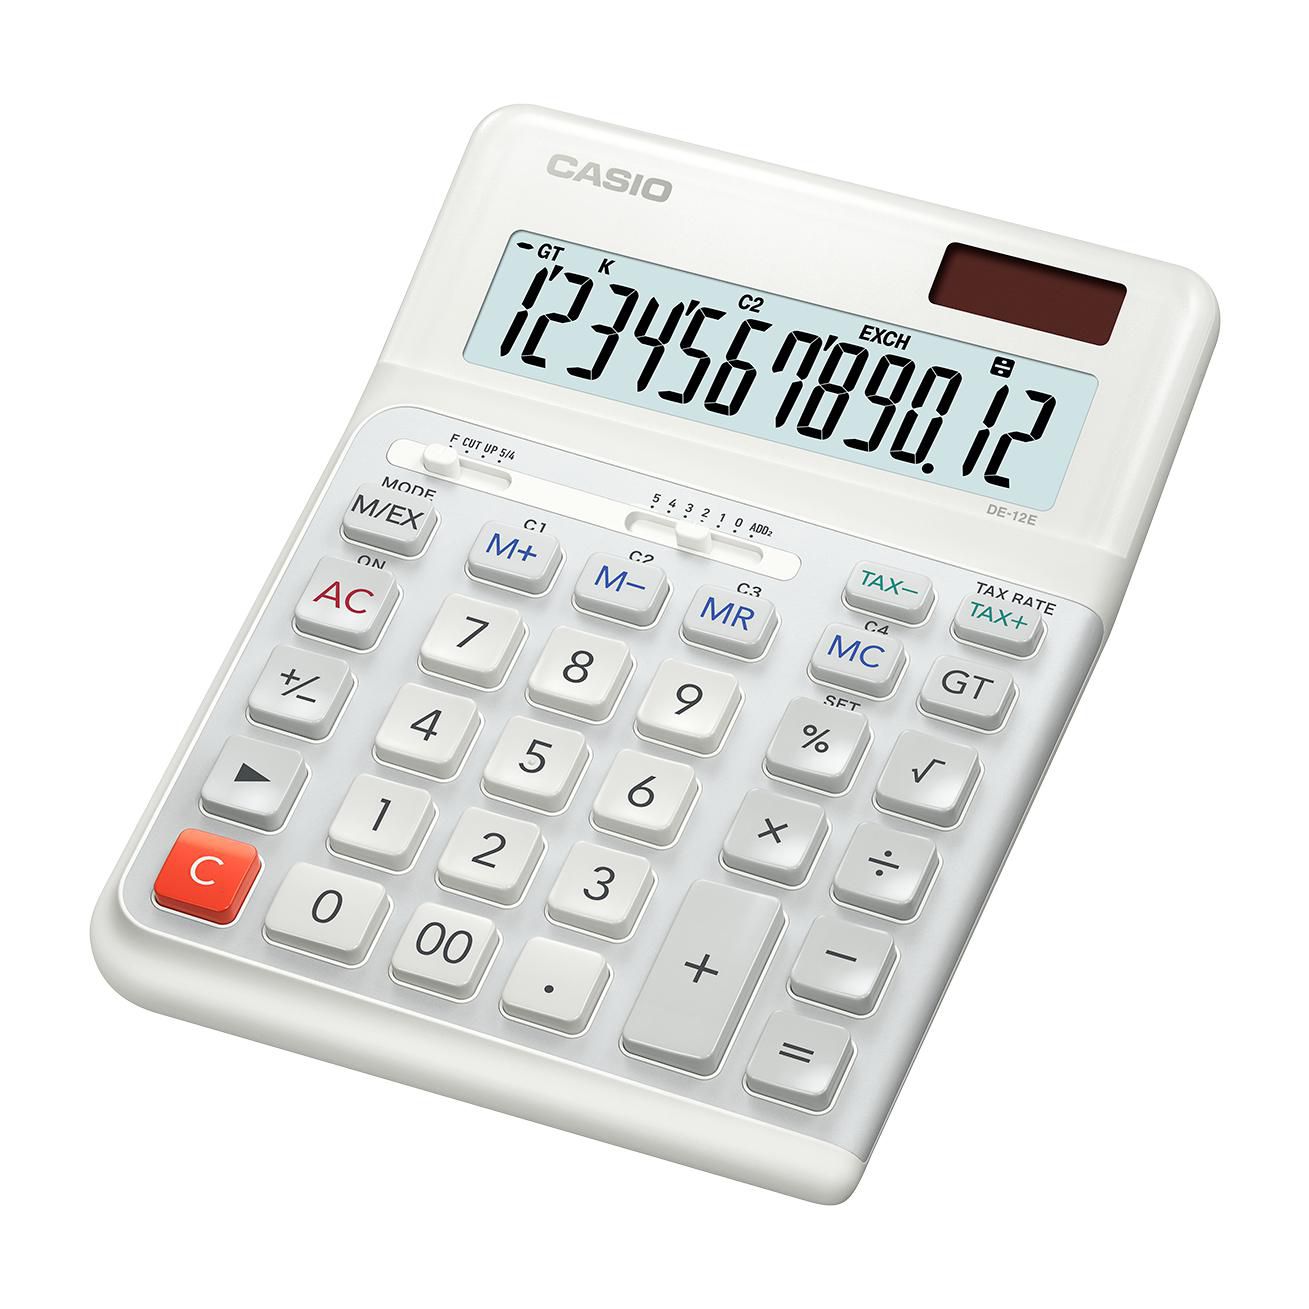 Casio DE-12E-WE W128329462 Calculator Desktop Basic White 